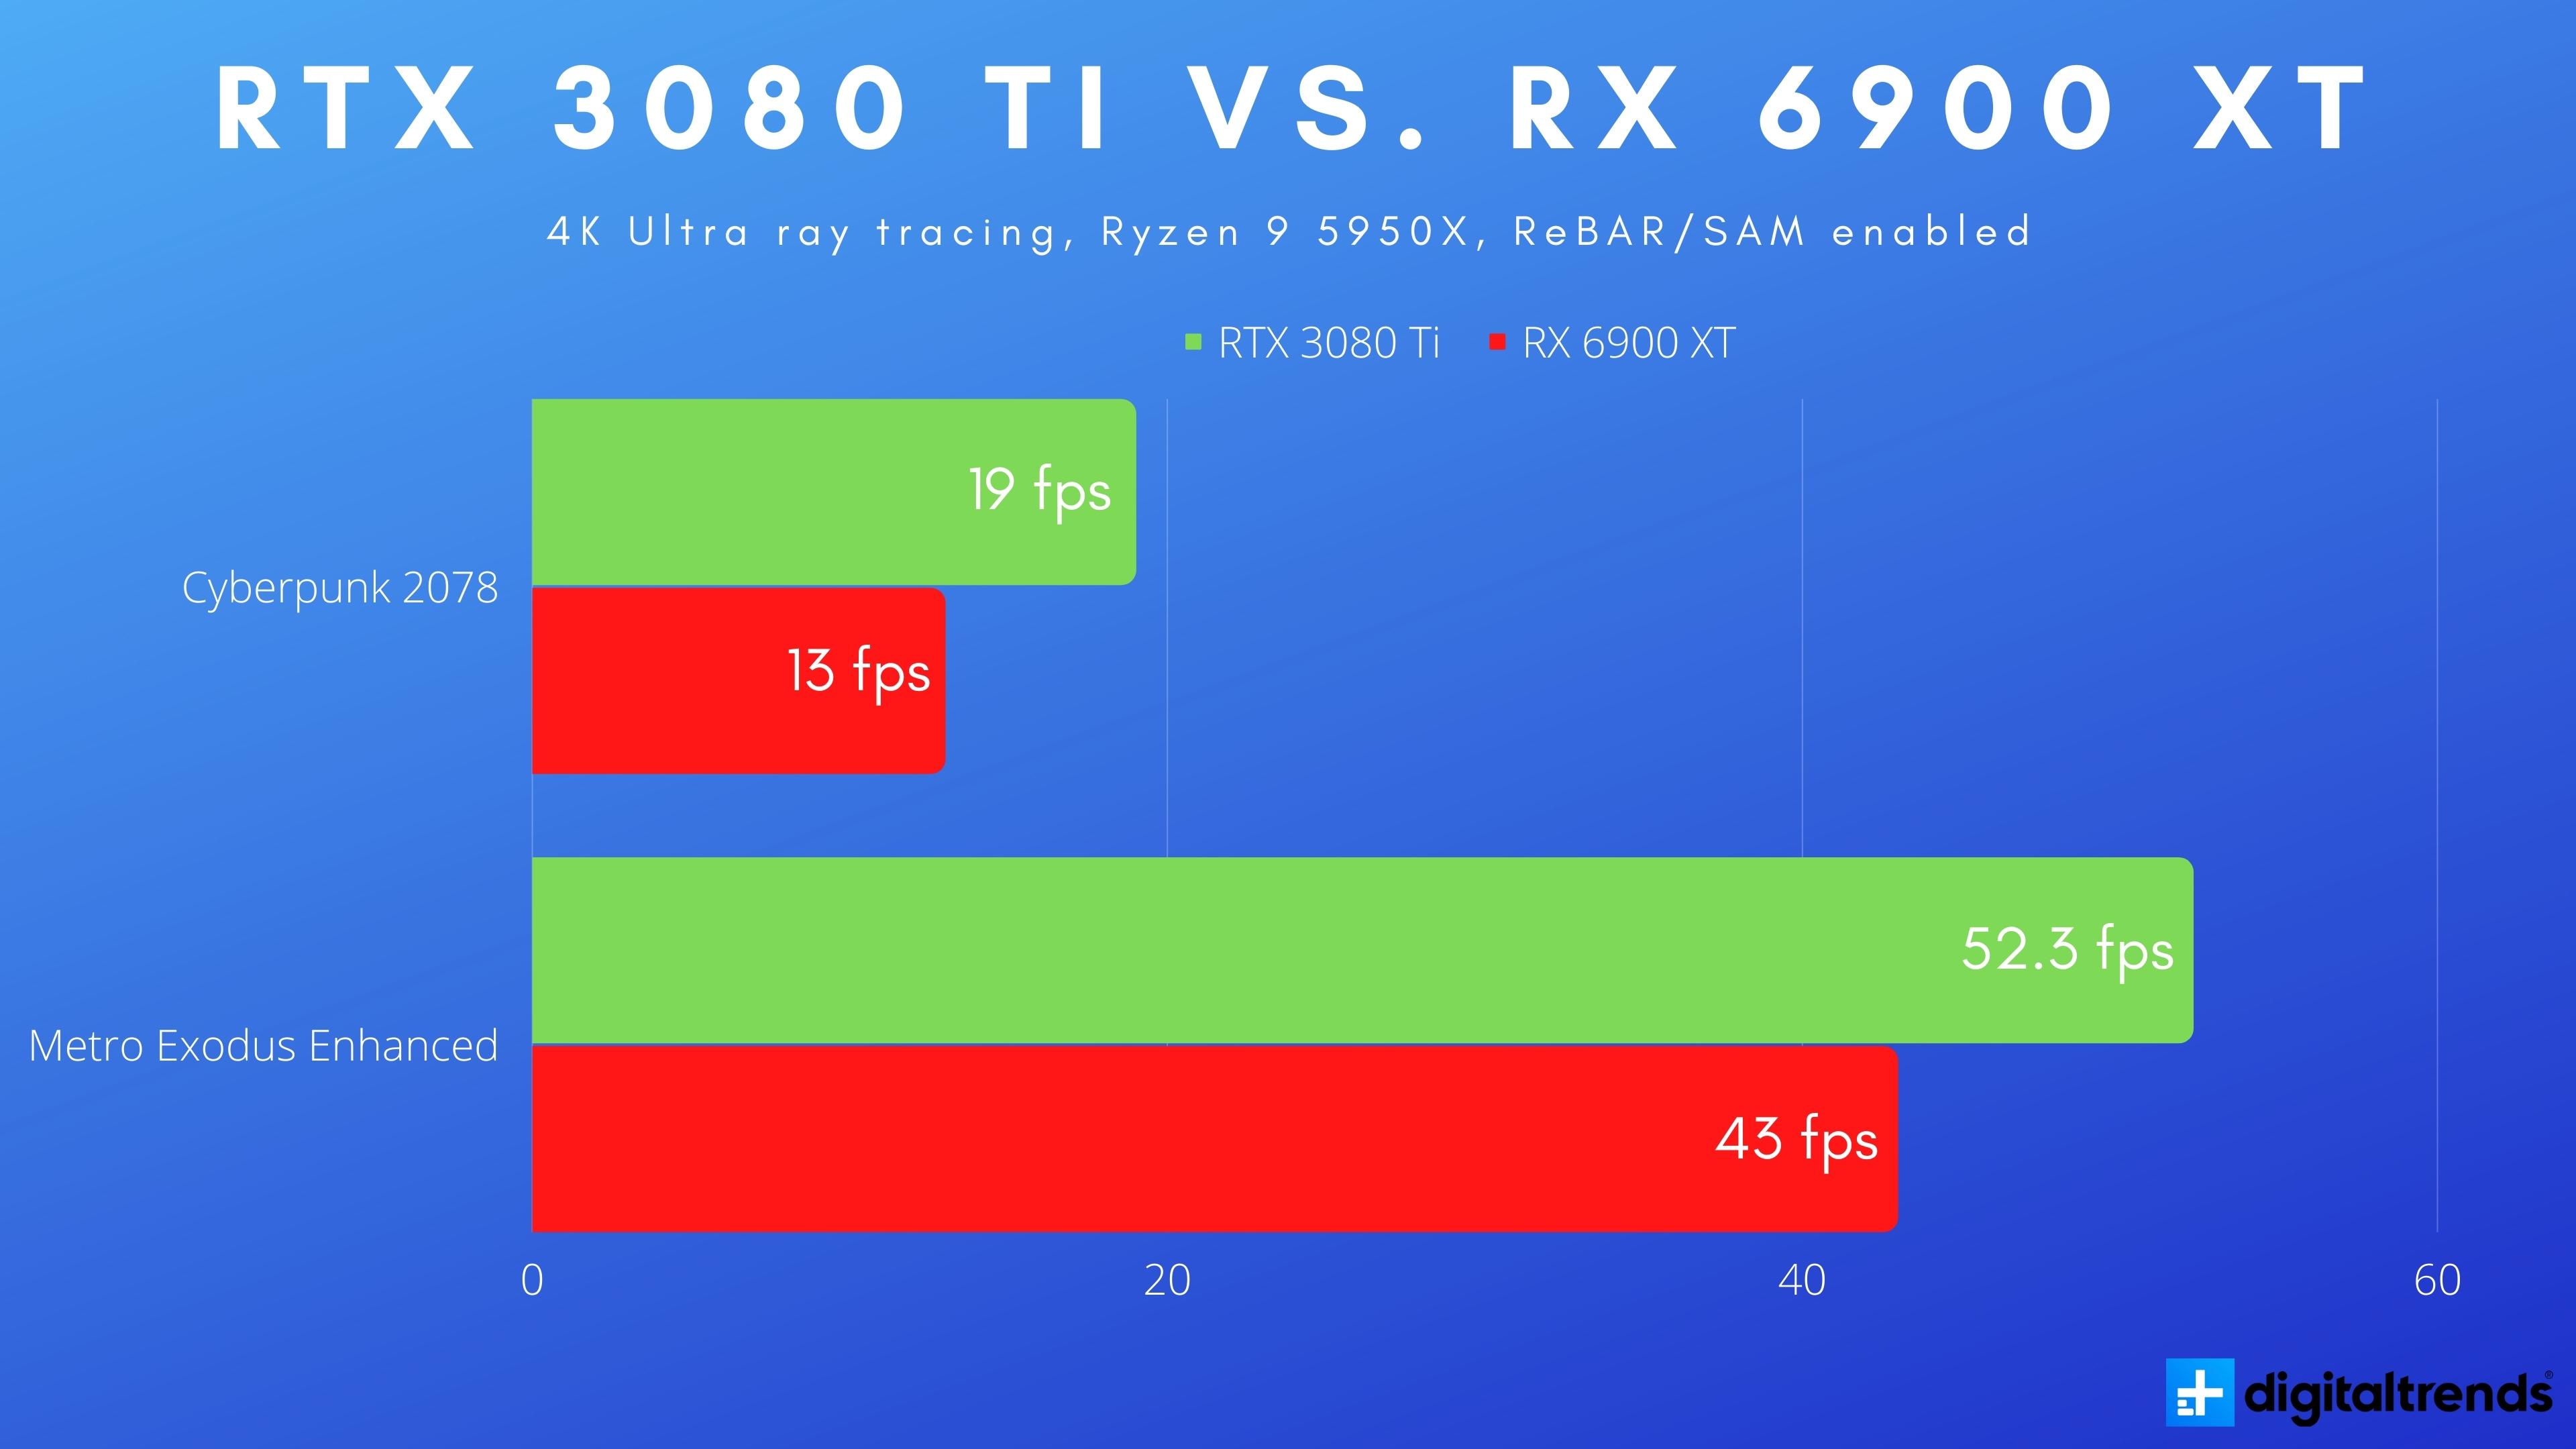 Nvidia RTX 3080 vs AMD Radeon RX 6800 XT: Which graphics card will win?